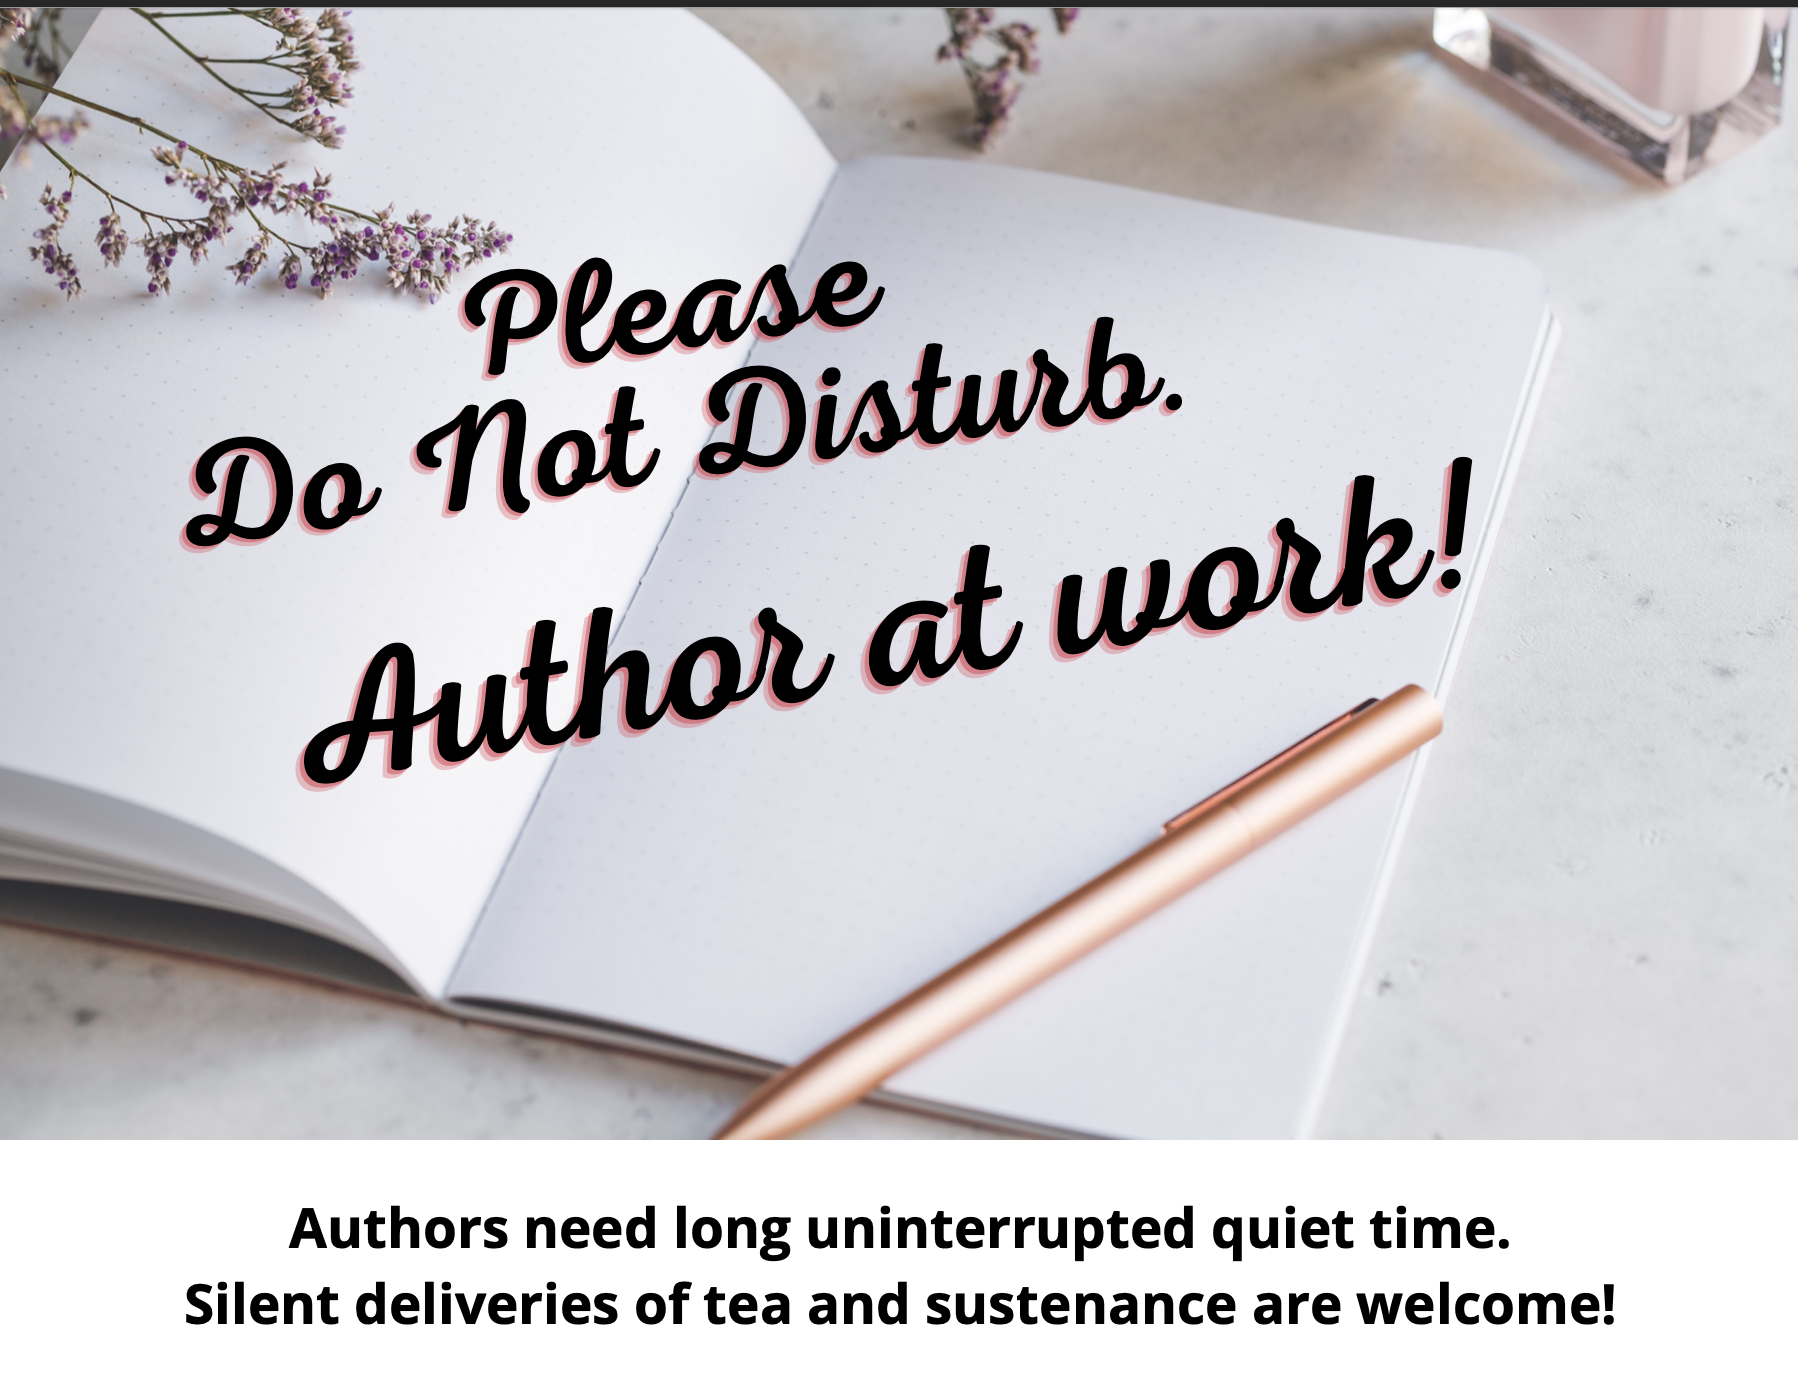 Do Not Disturb Author at Work